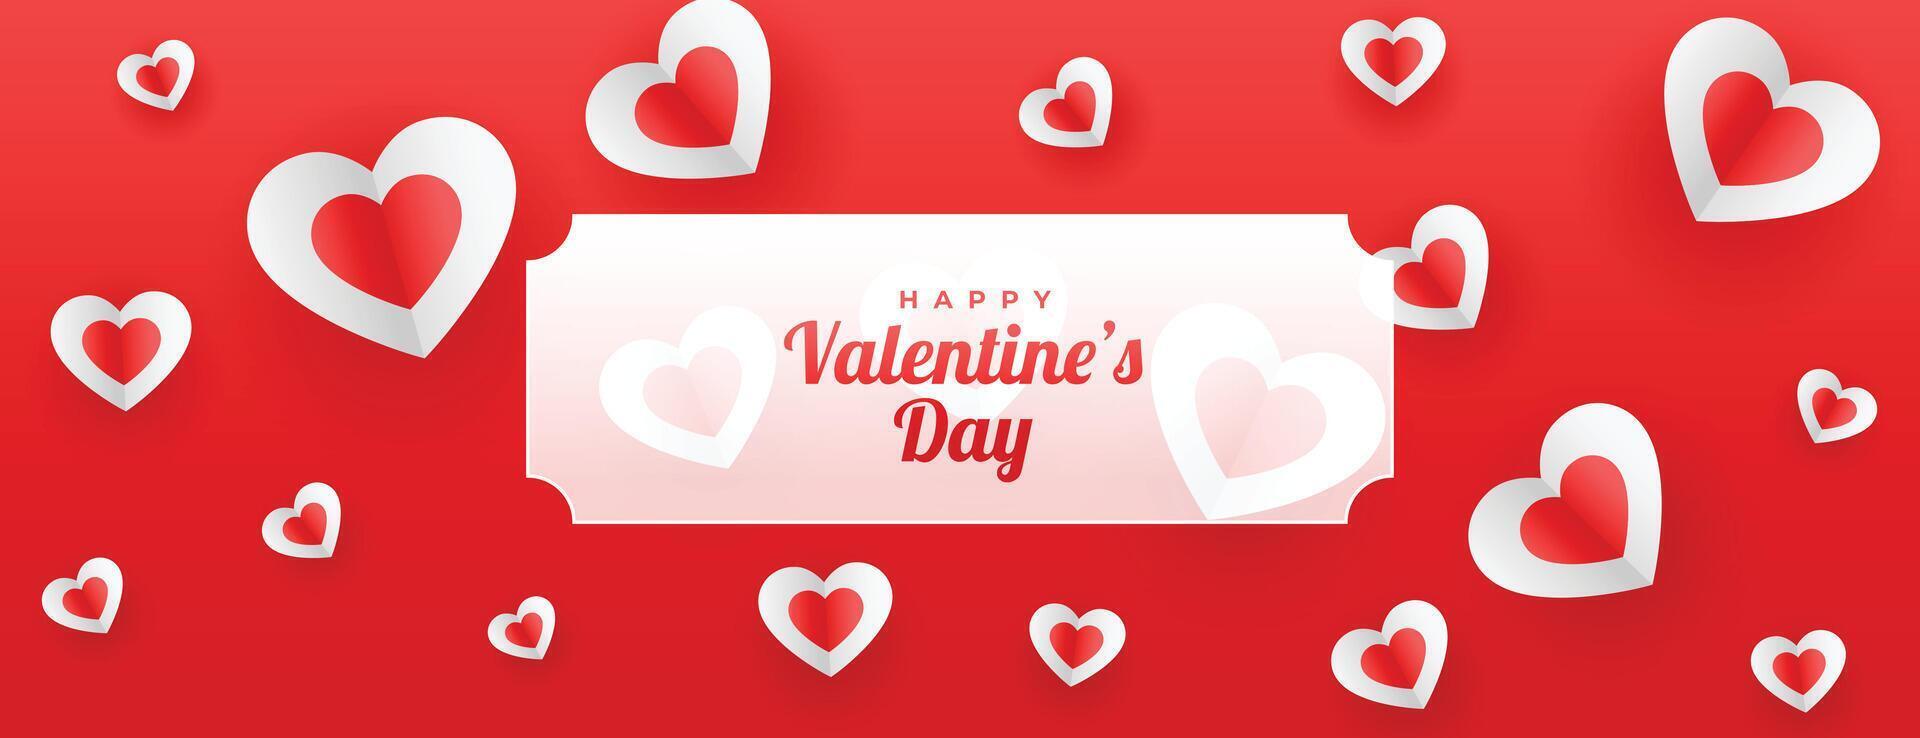 valentijnsdag dag rood liefde papier harten banier vector